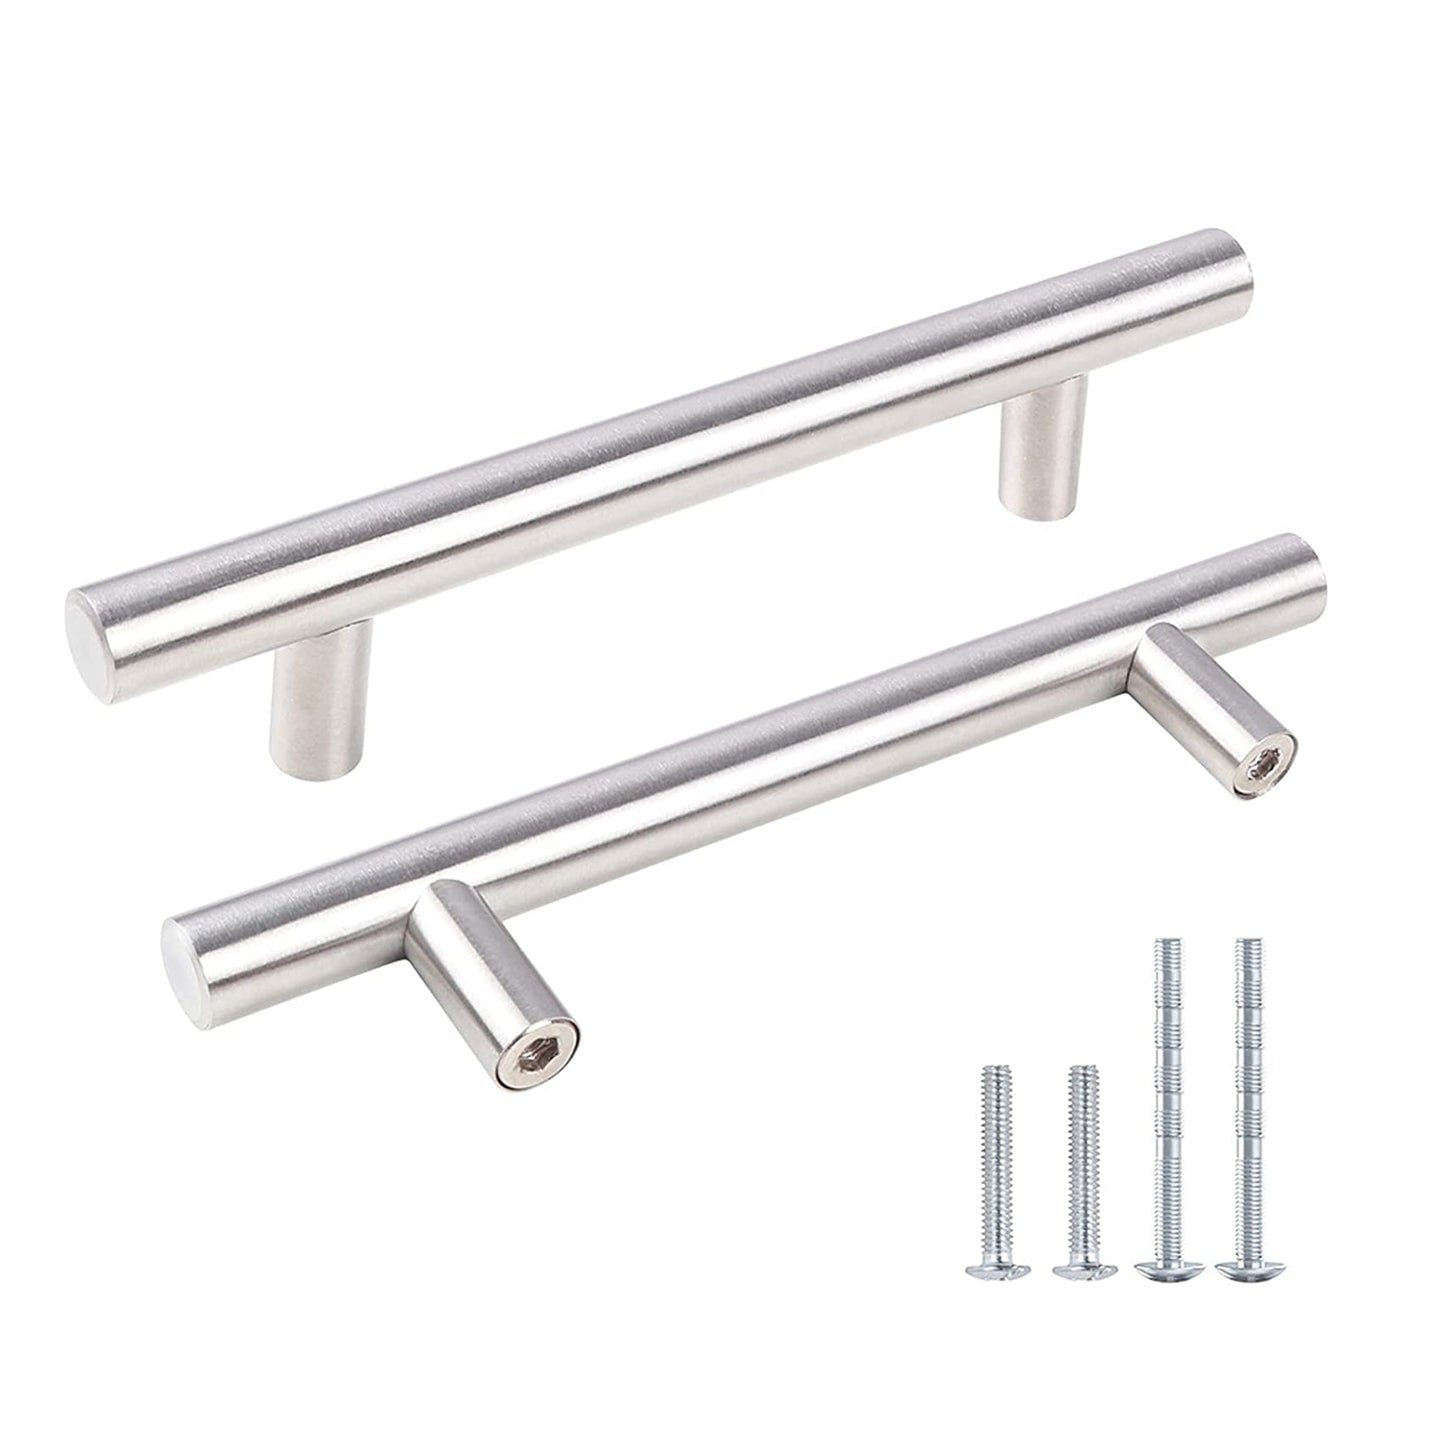 Stainless steel hardware bedroom kitchen furniture modern Cabinet door drawer T bar pull handles